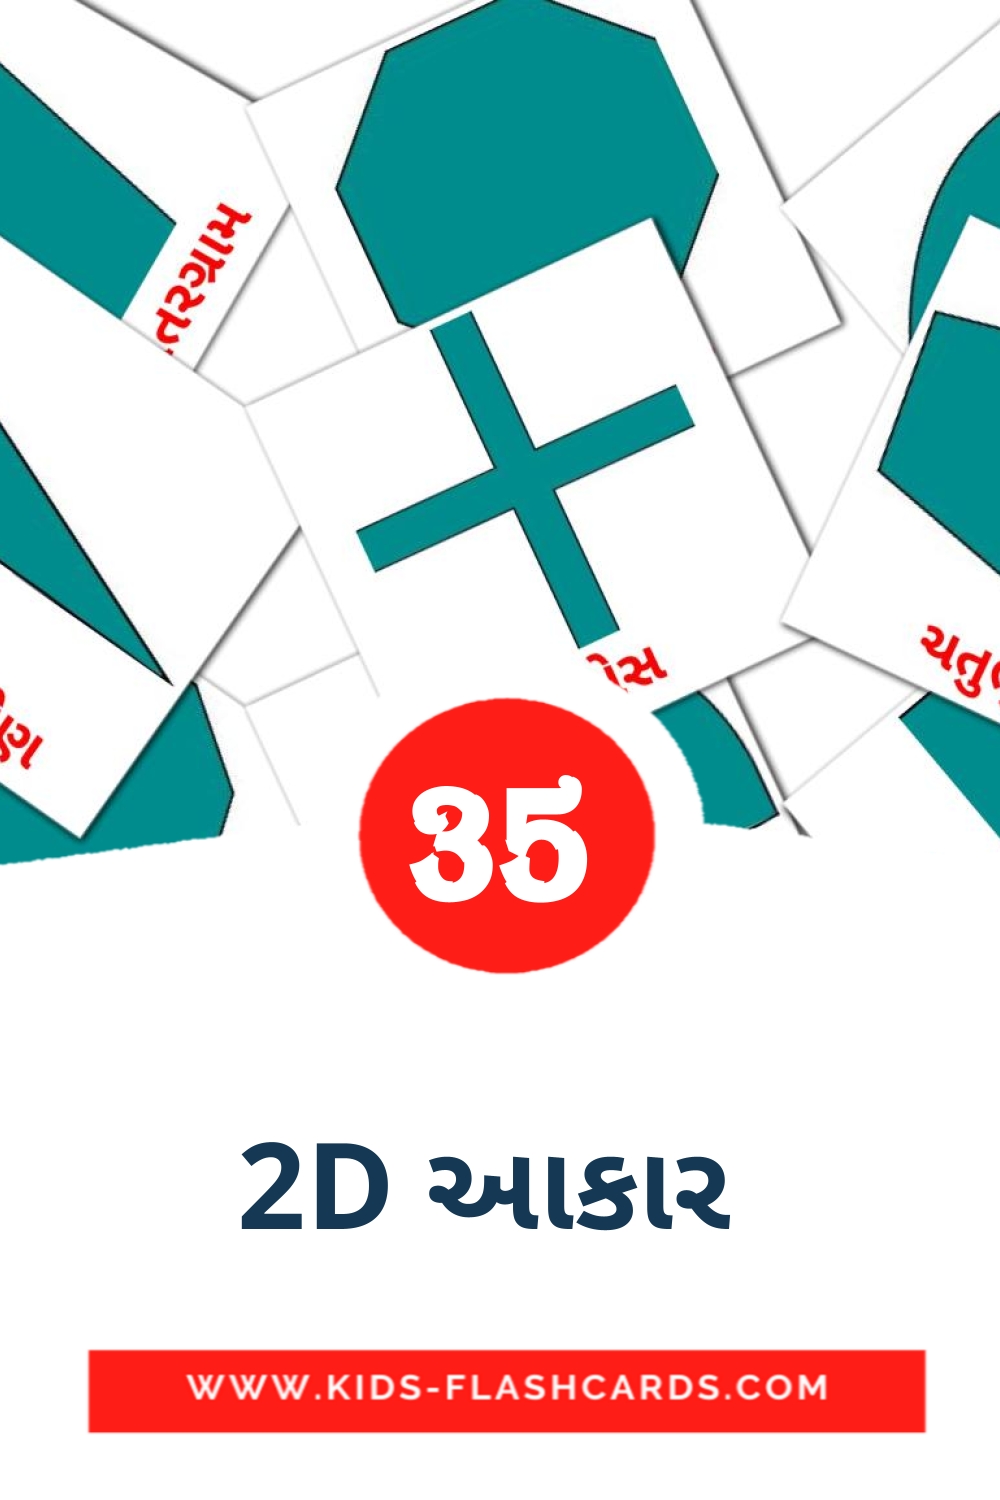 35 carte illustrate di 2D આકાર  per la scuola materna in gujarati